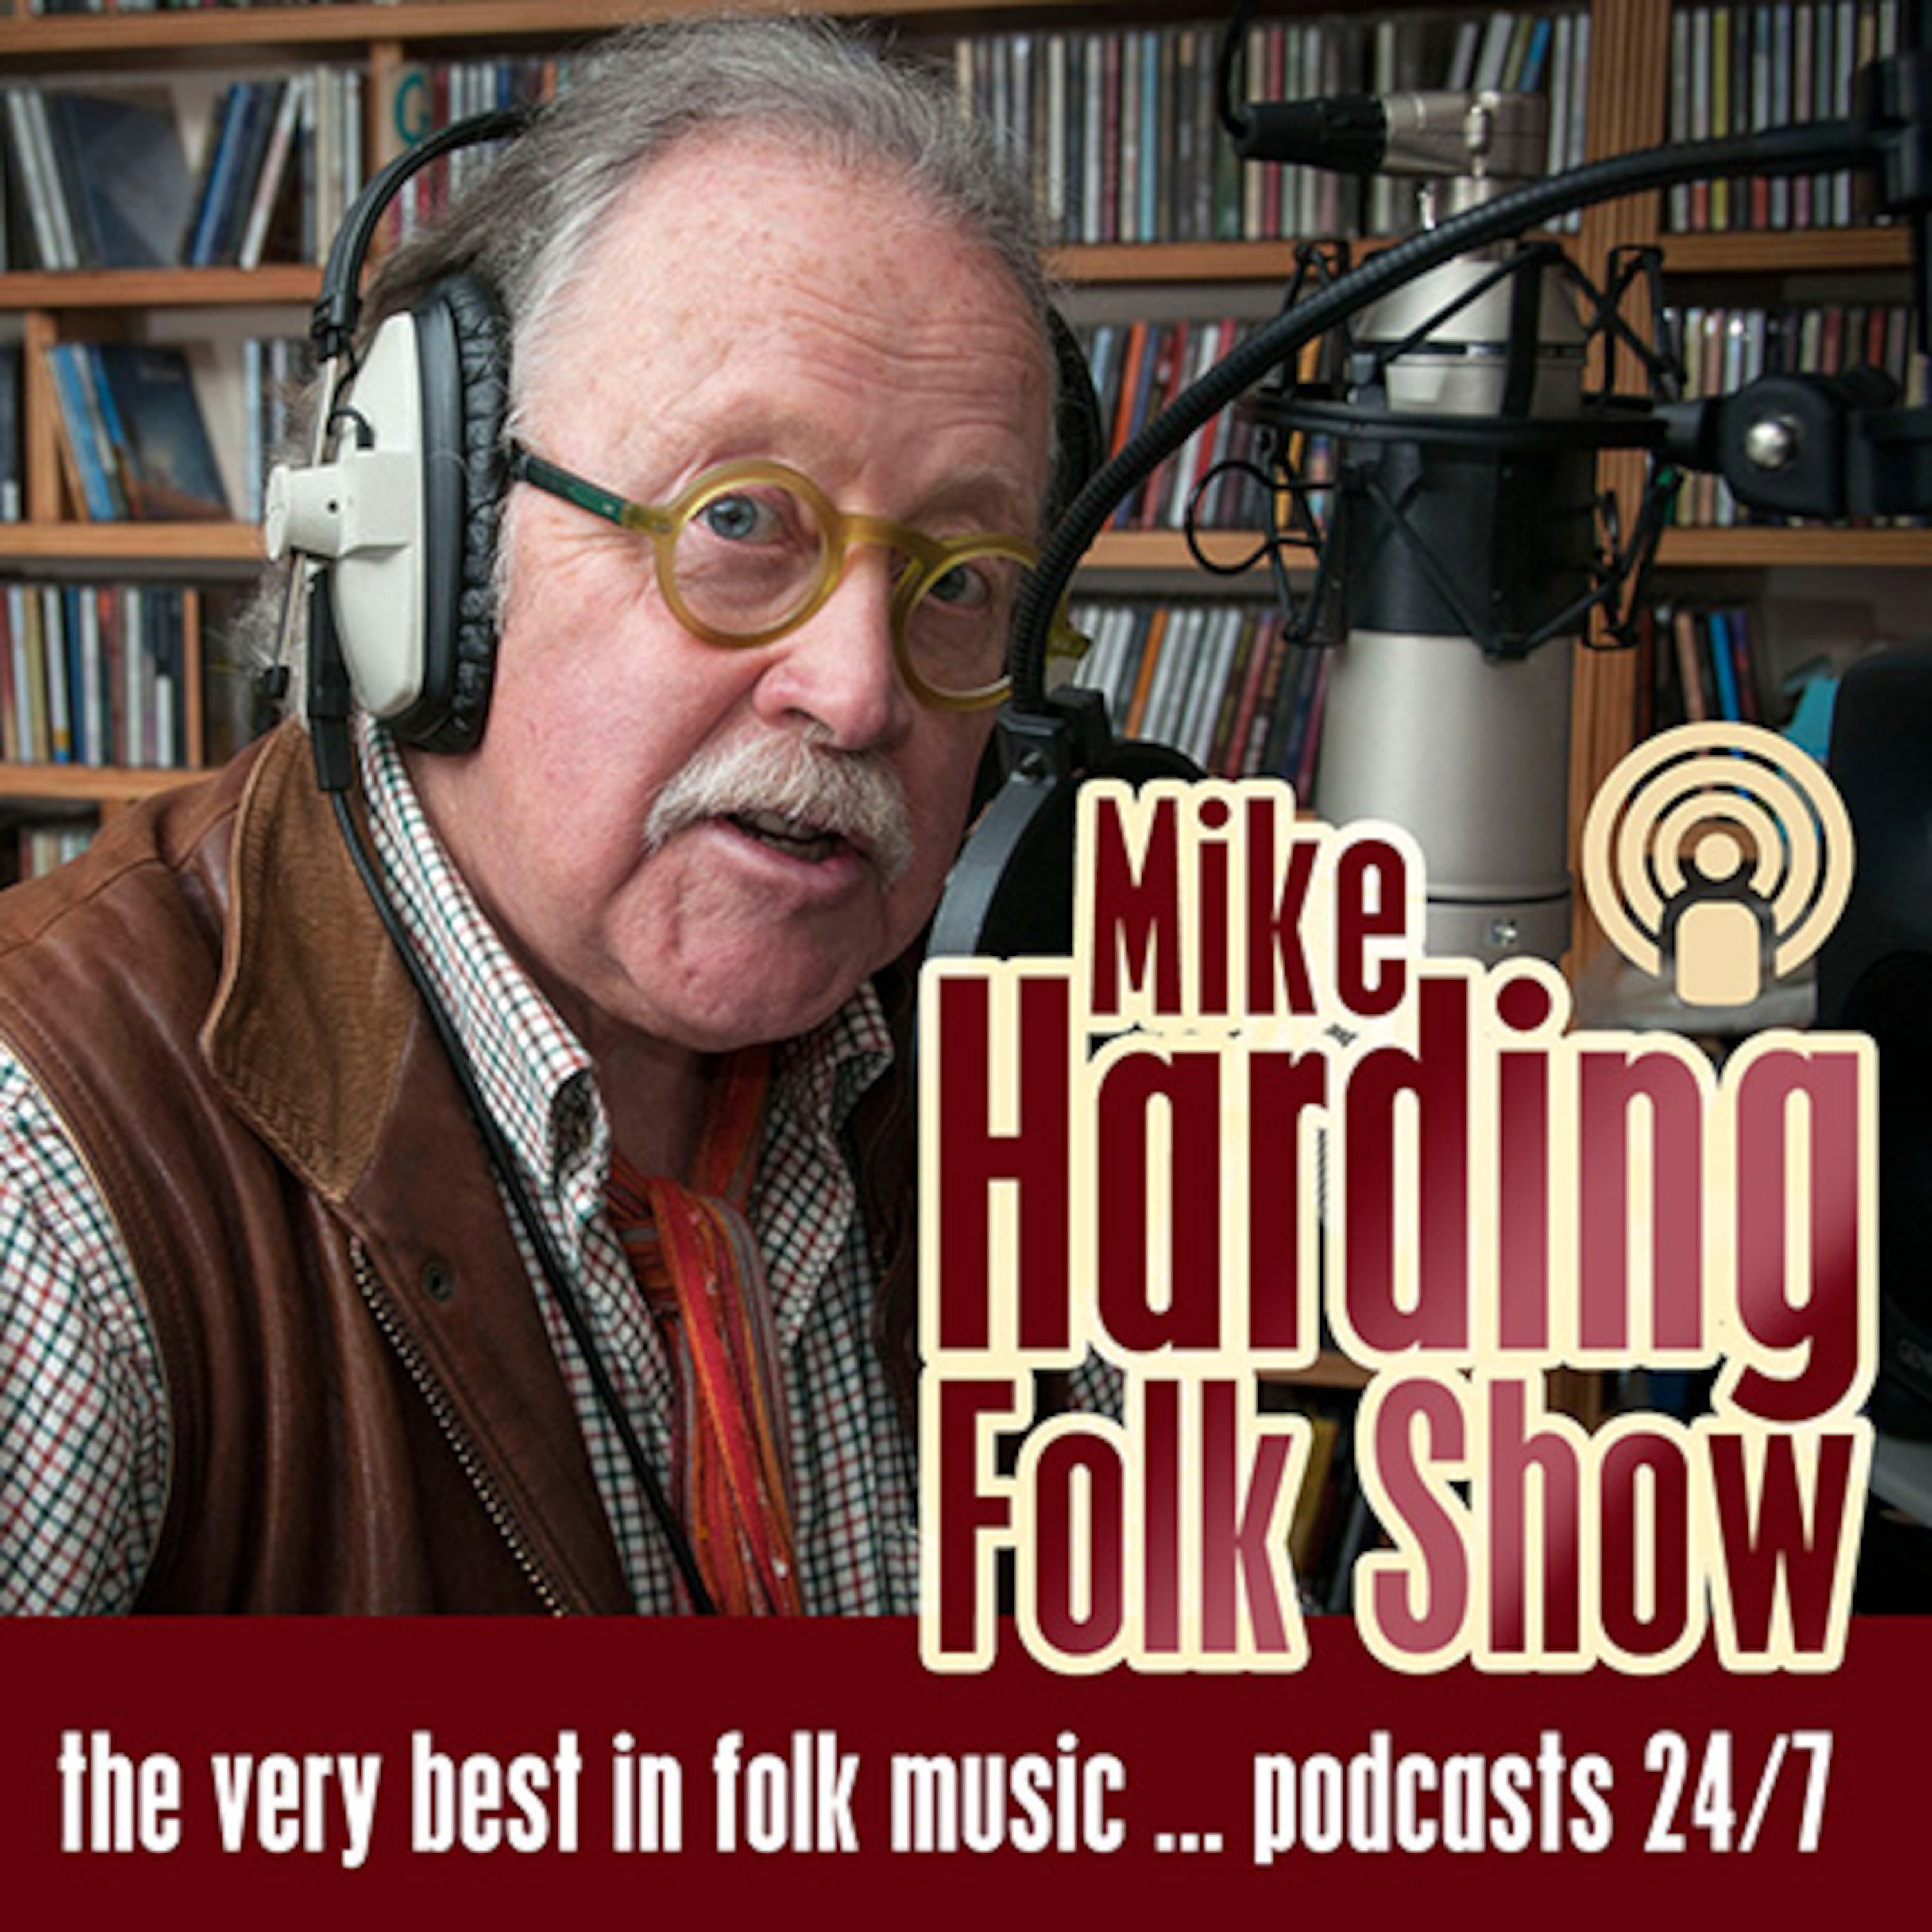 Mike Harding Folk Show 157